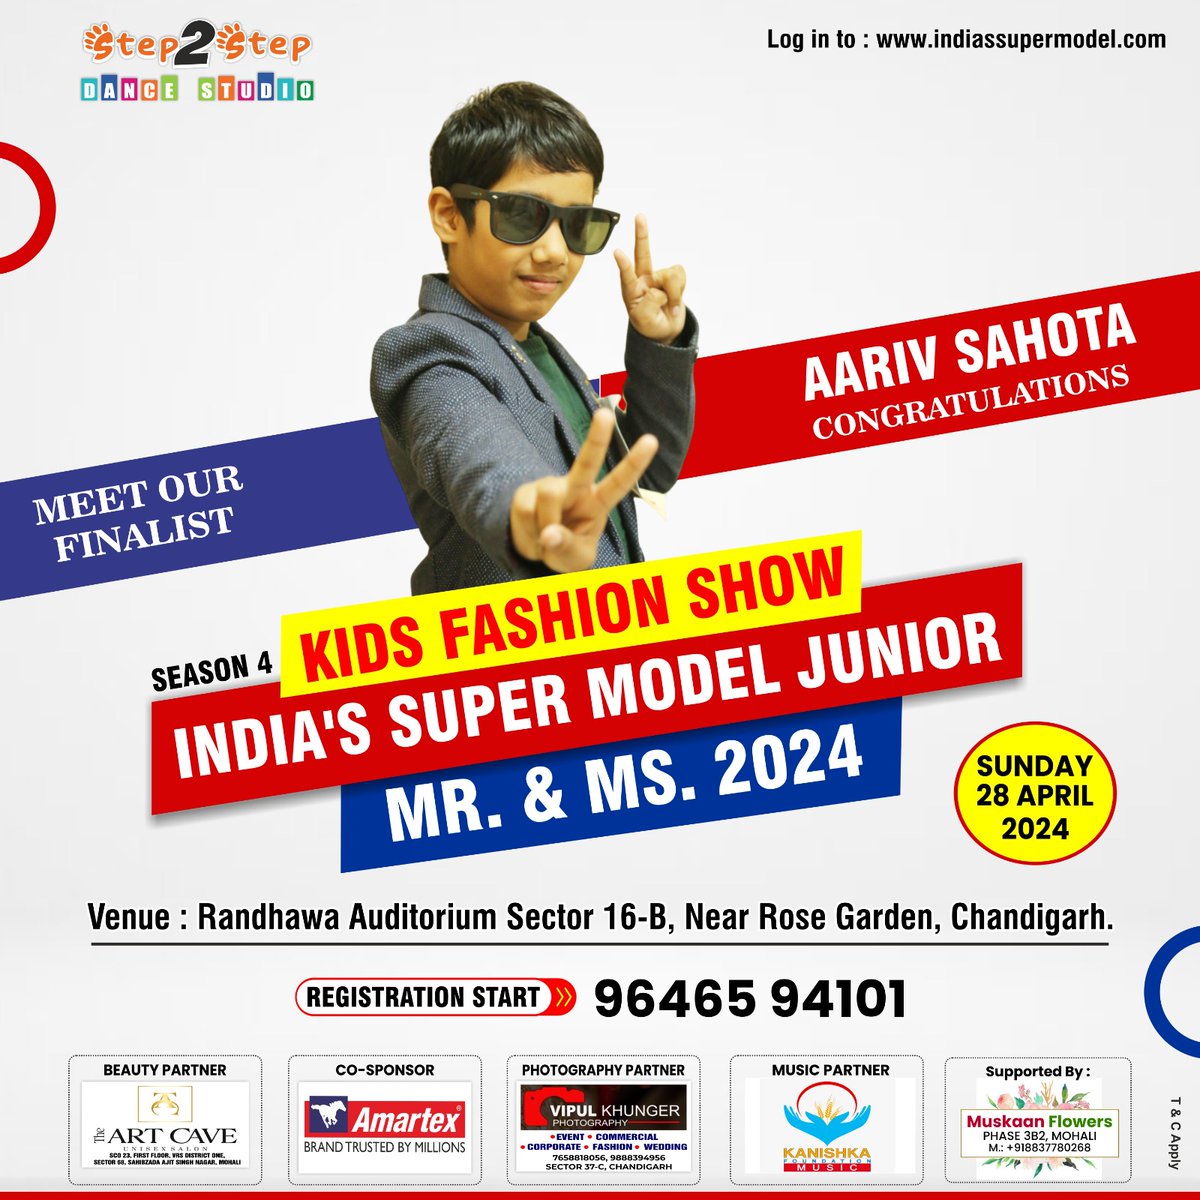 Welcome to the Grand Finale!
'Aariv Sahota'

India's Super Model Junior Mr. & Ms. 2024 || Biggest Kids Fashion Show || Season 4 || Chandigarh.

📲 Register Now: 9646594101

#indiassupermodeljunior2024 #indiafashionshow2024 #Season4 #SuperModelJunior #Step2StepDanceStudio